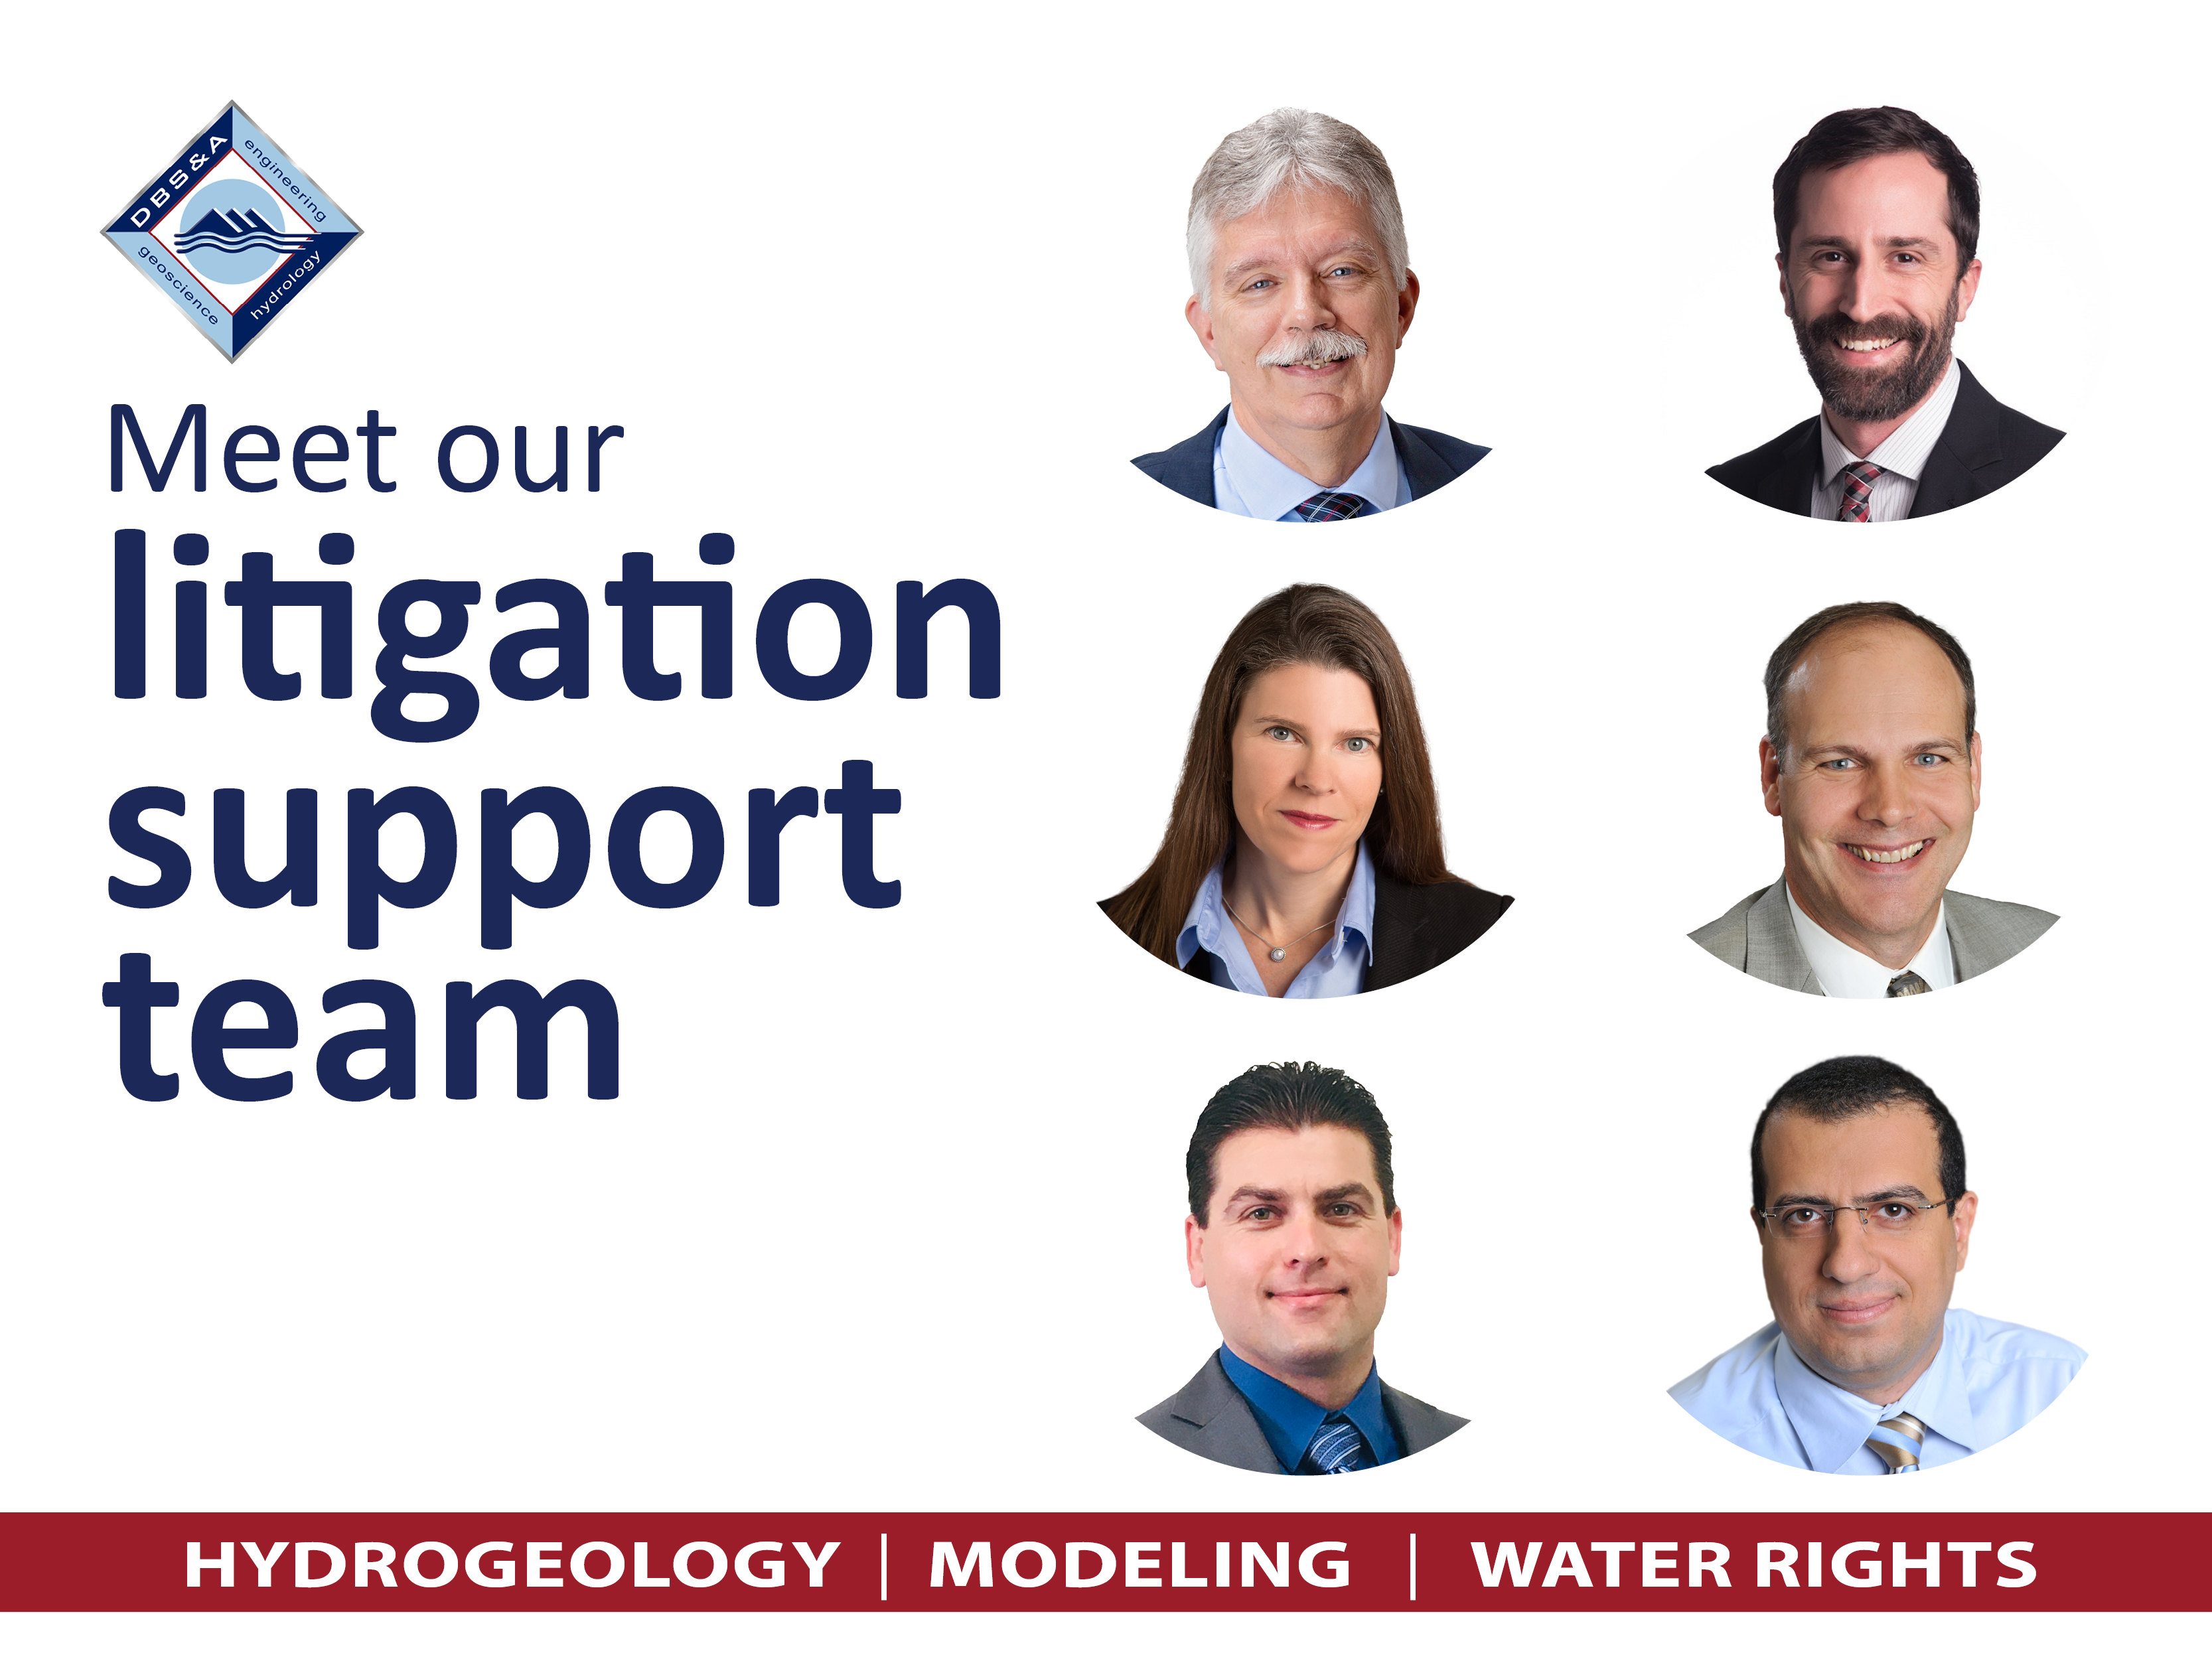 Meet our litigation support team